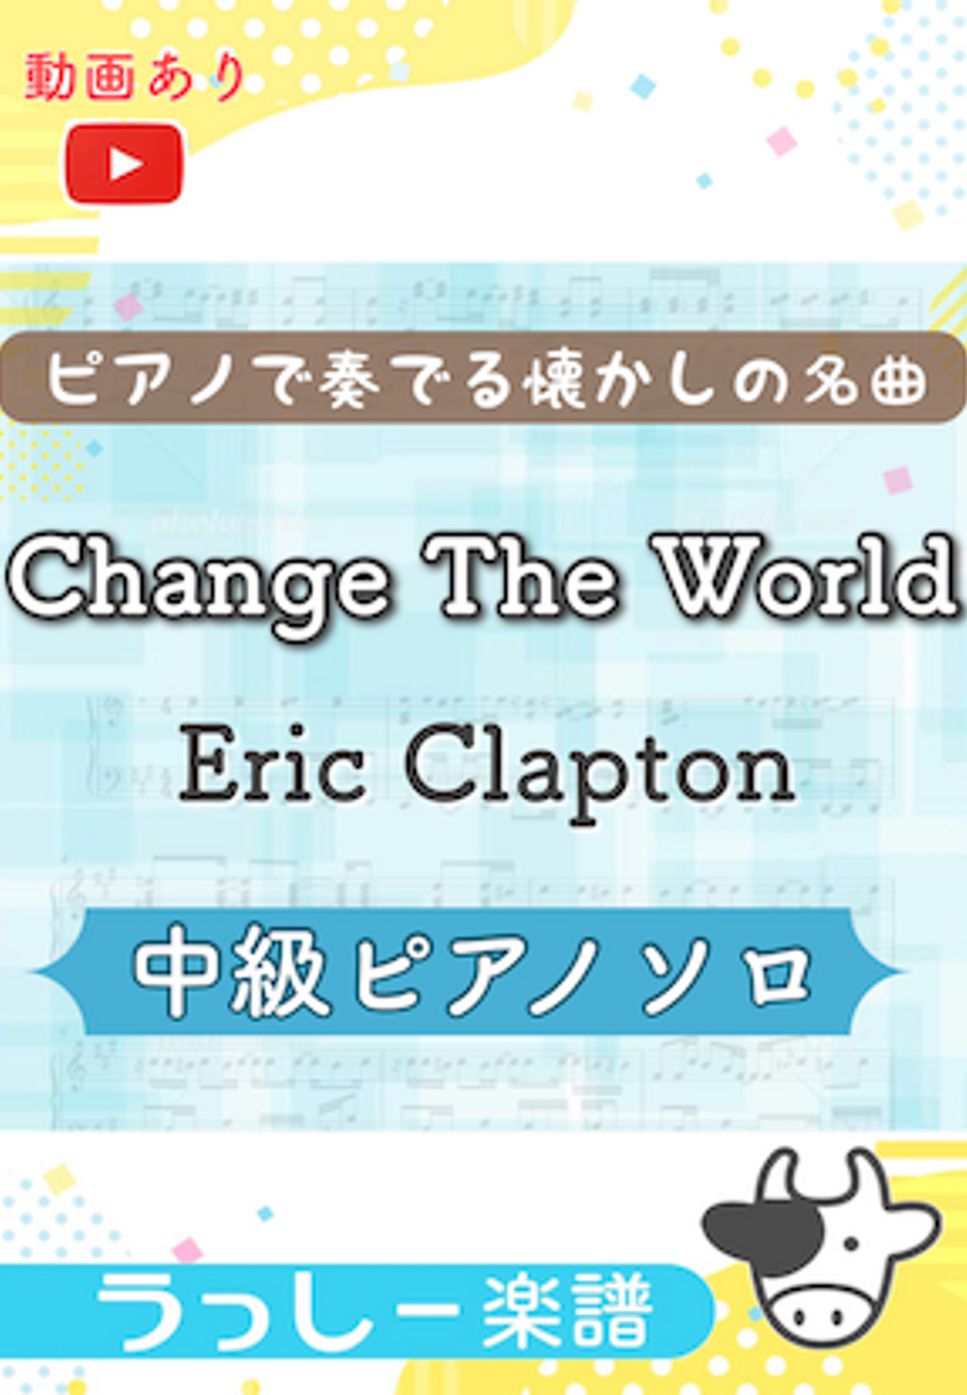 Eric Clapton - Change The World (懐かしの洋楽) by 牛武奏人